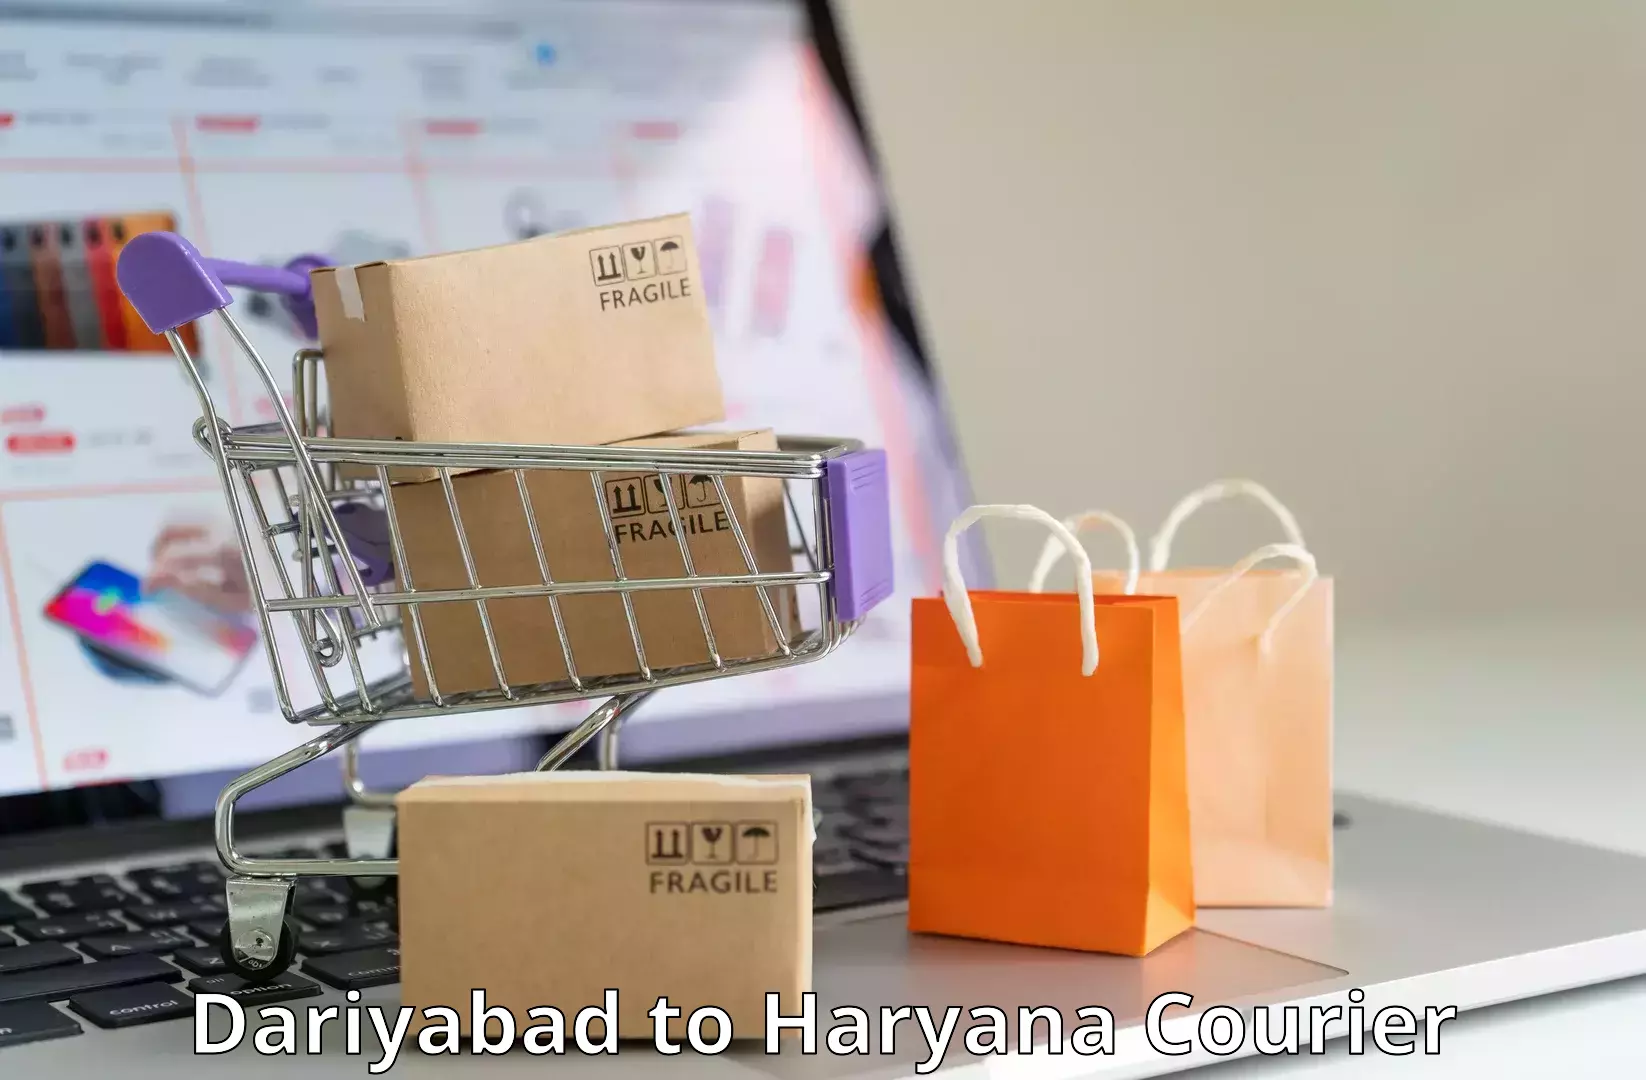 Express delivery network Dariyabad to NCR Haryana